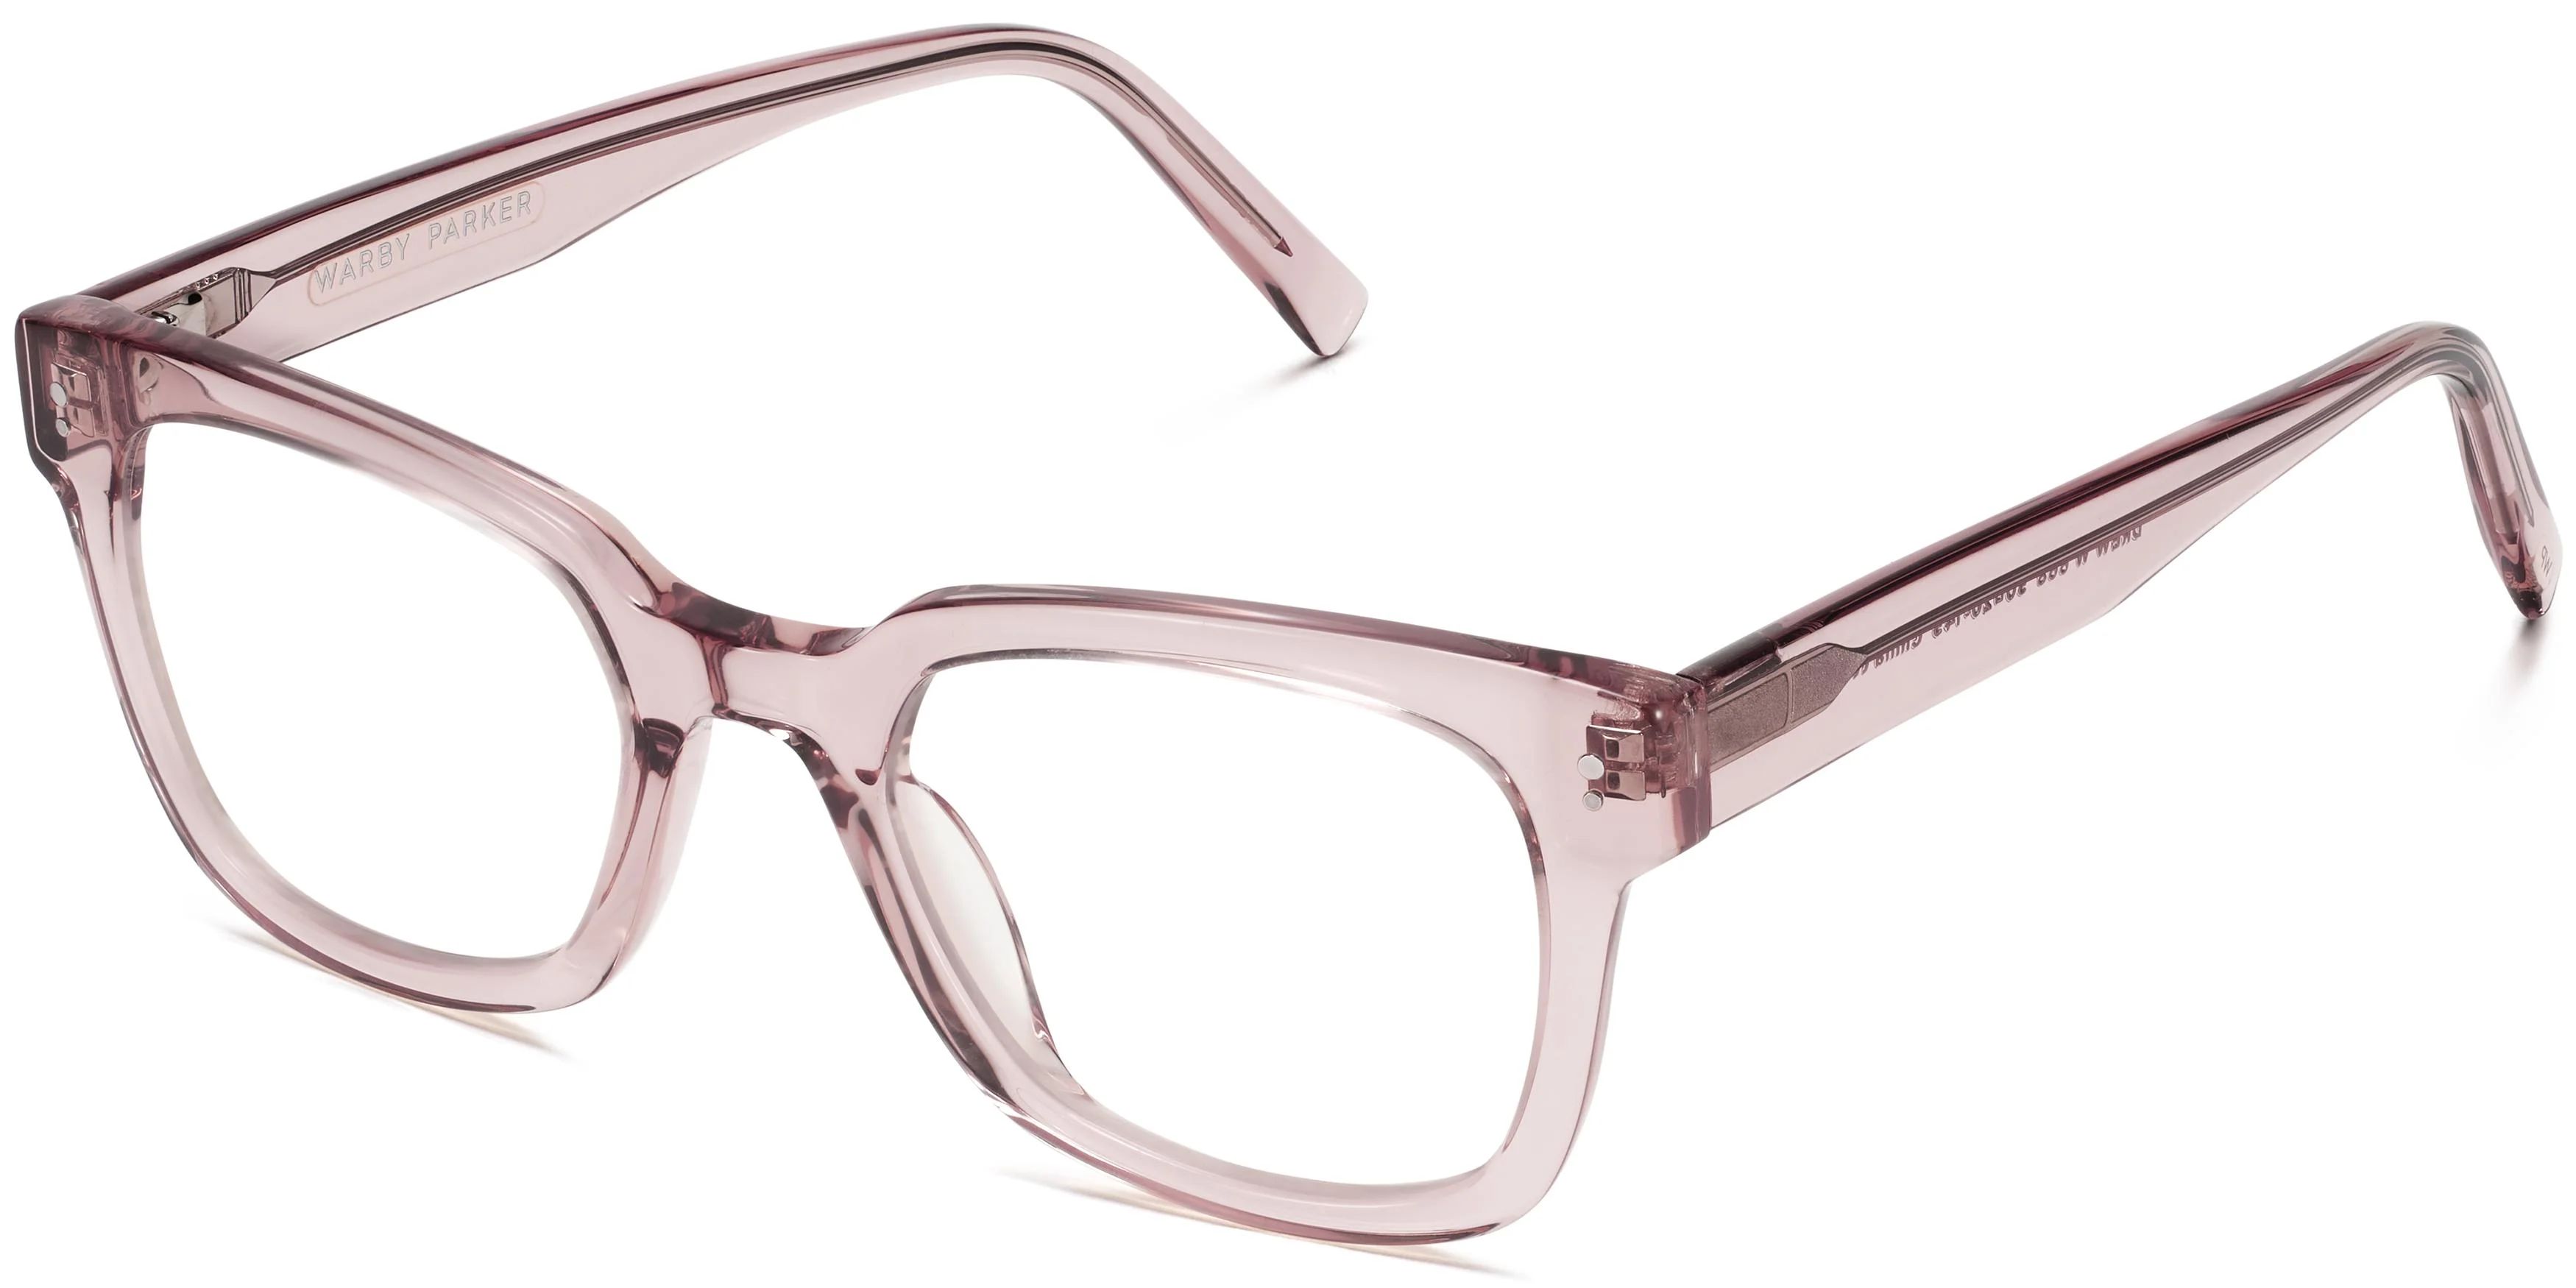 Drew Eyeglasses in Rose Water | Warby Parker | Warby Parker (US)